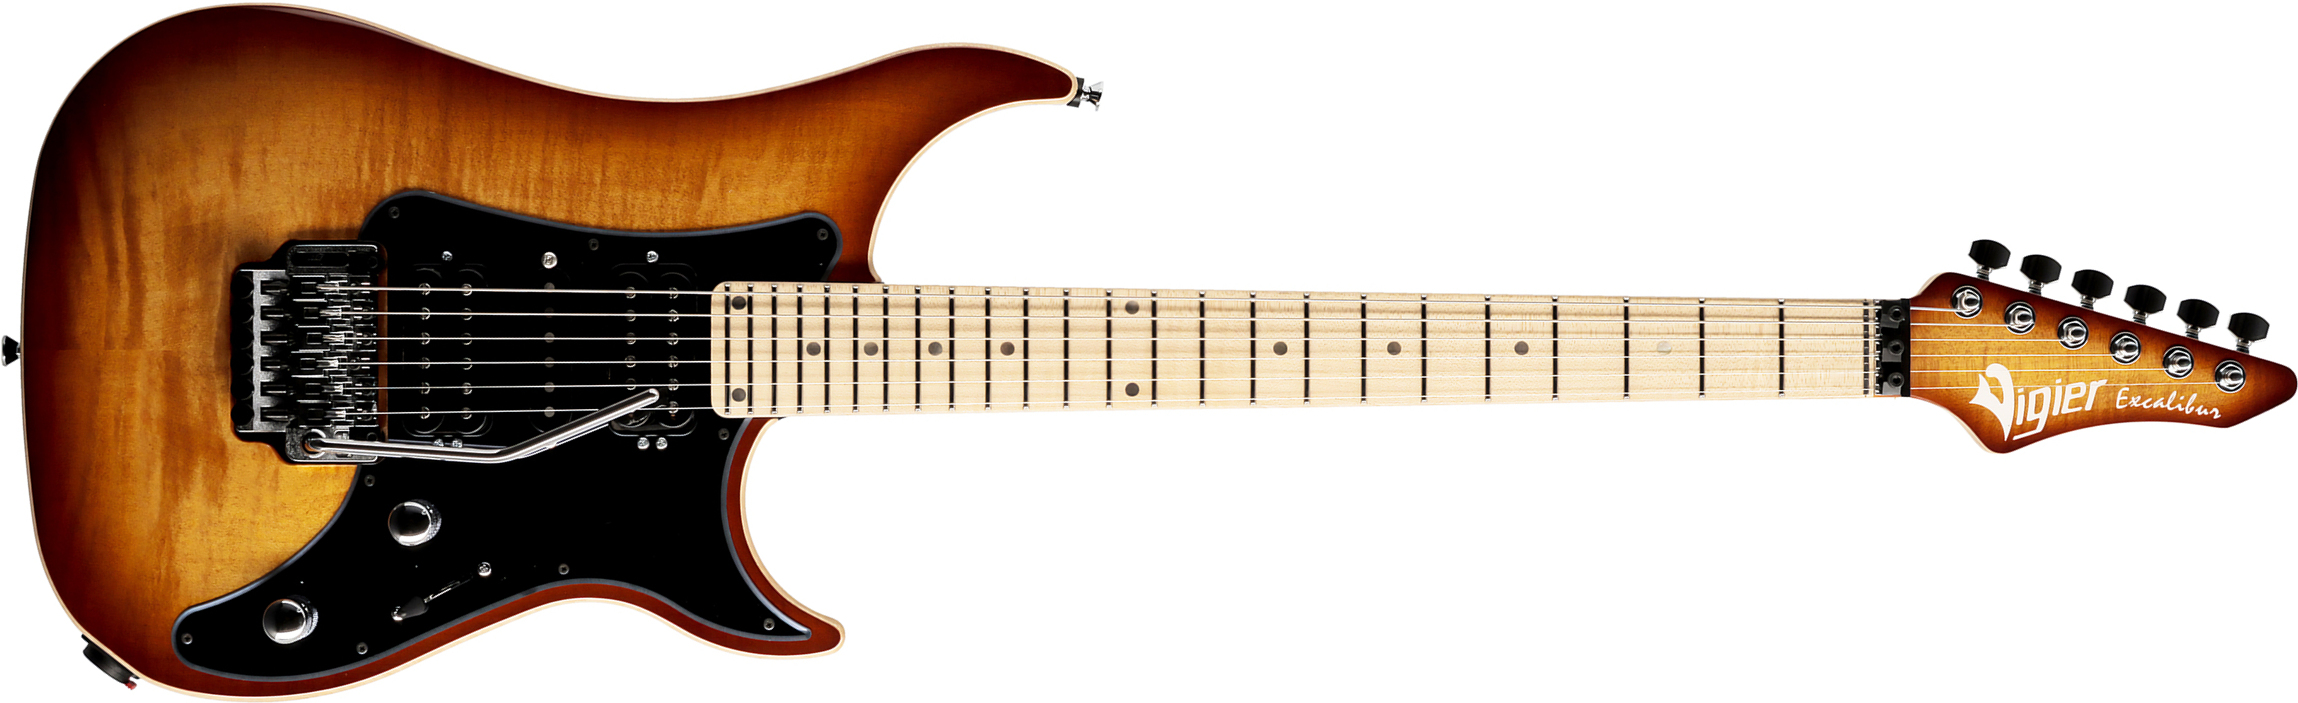 Vigier Excalibur Custom Hsh Fr Mn - Amber - Str shape electric guitar - Main picture